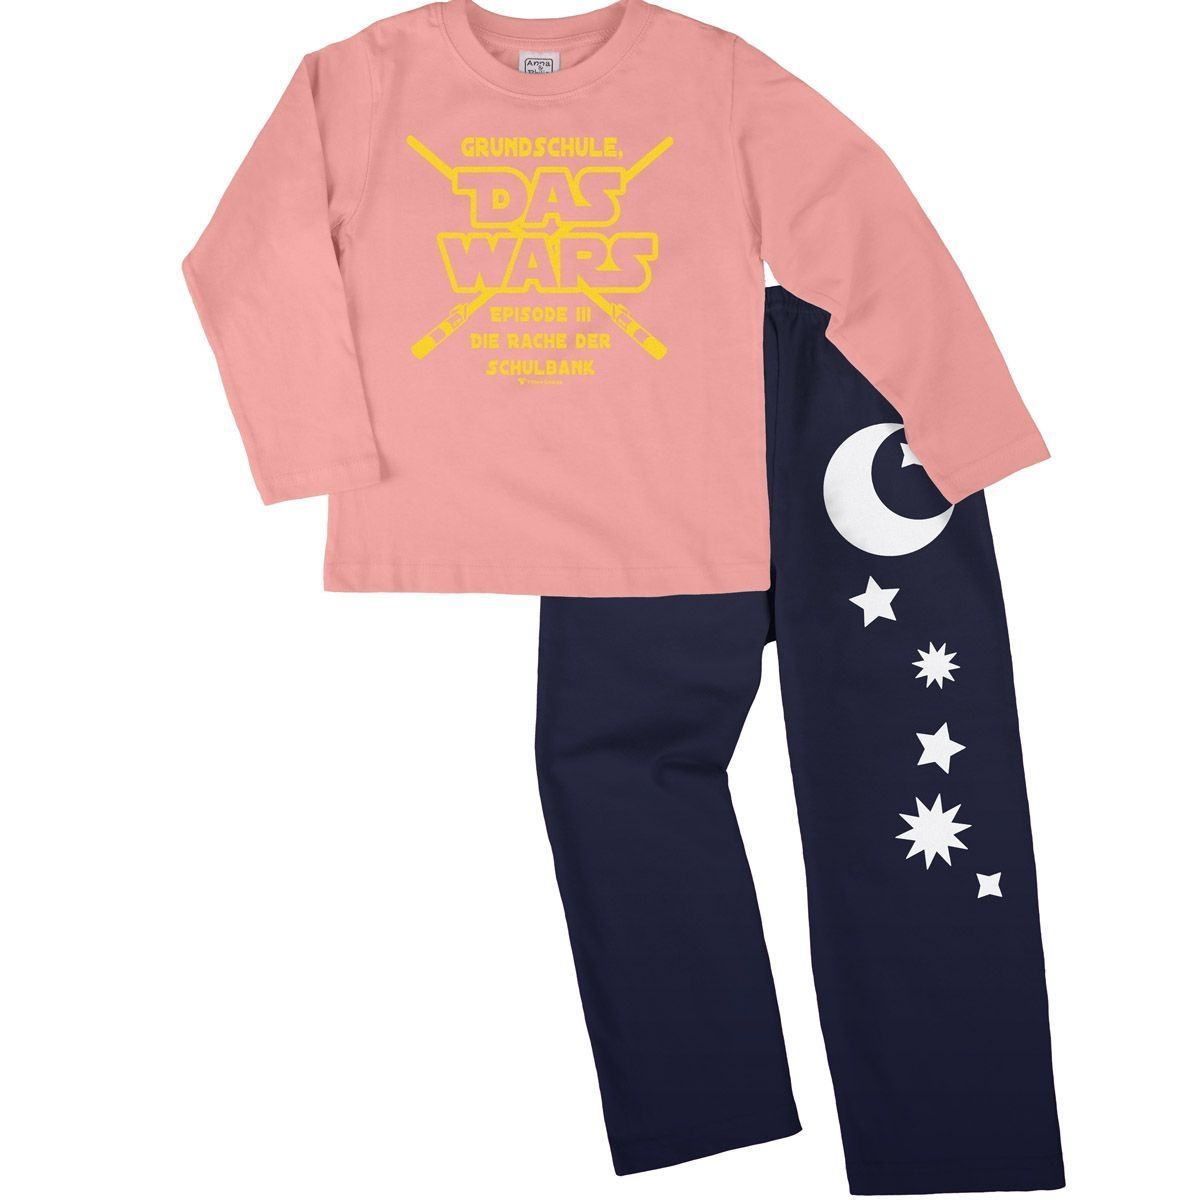 Das wars Grundschule Pyjama Set rosa / navy 134 / 140